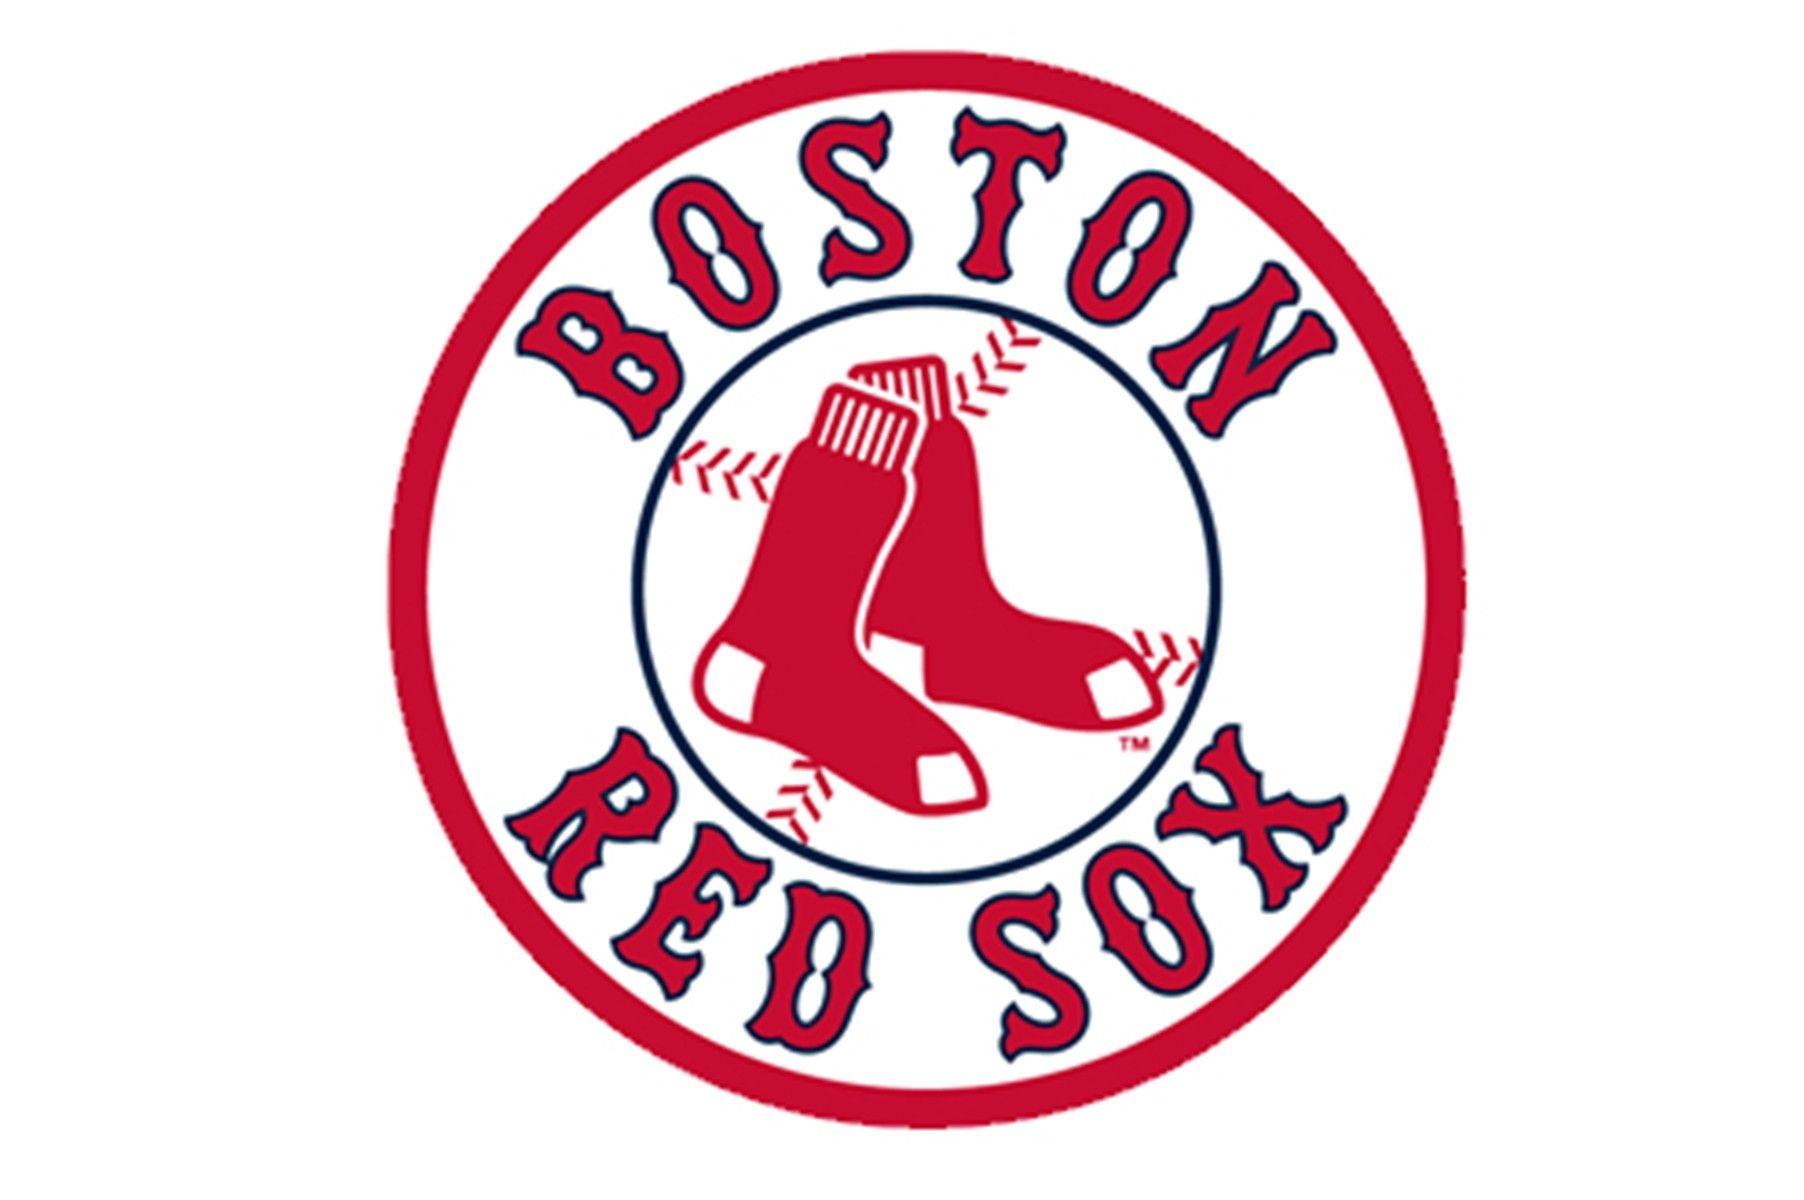 Boston Red Soxs